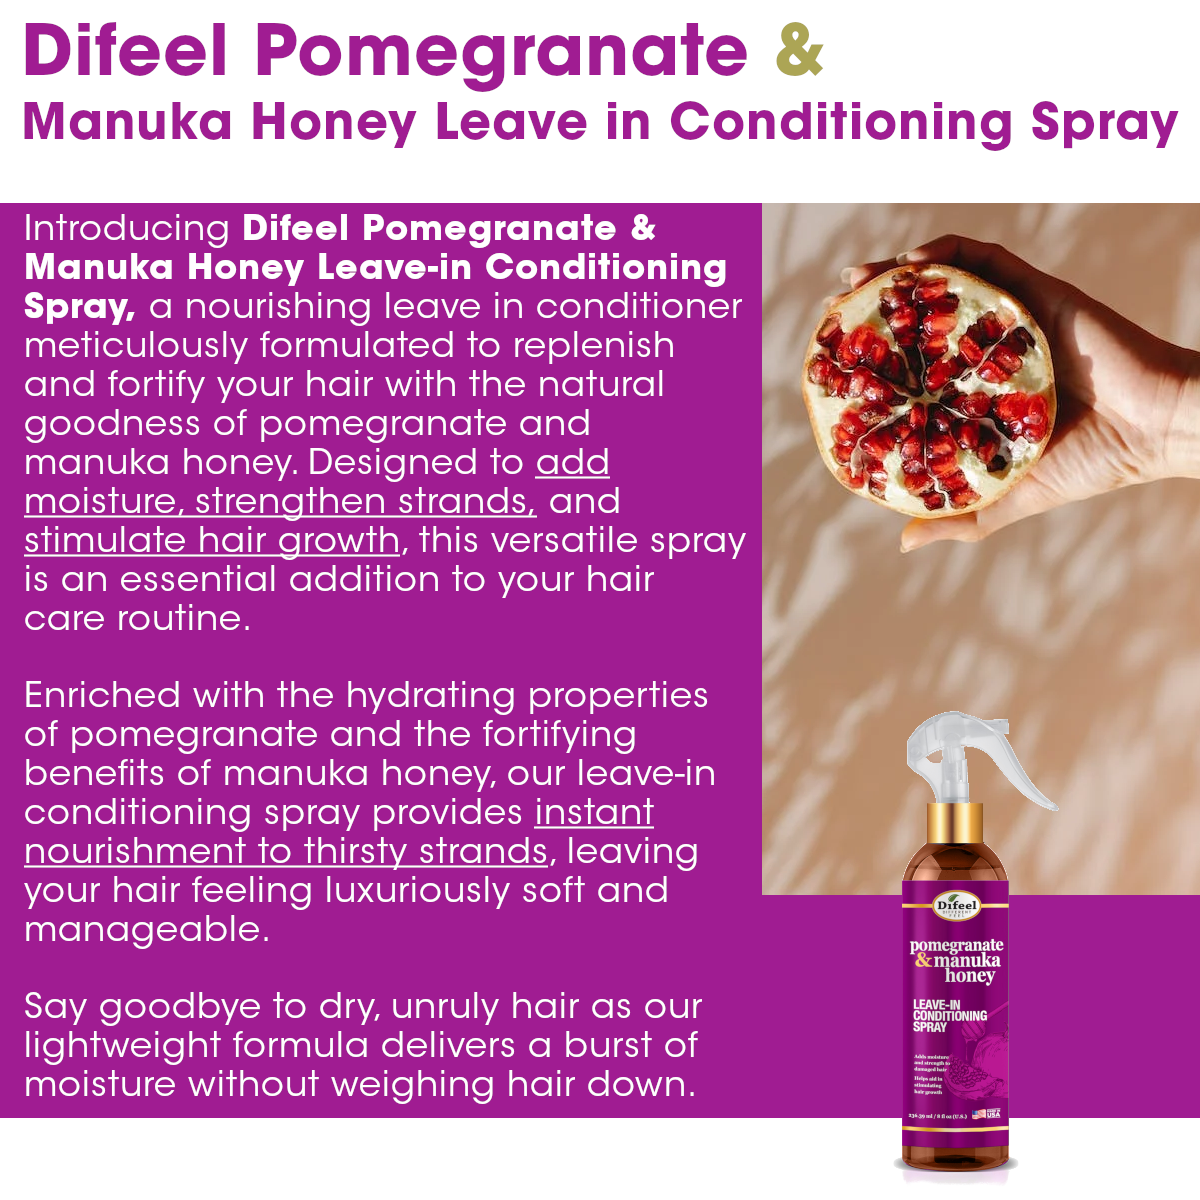 Difeel Pomegranate & Manuka Honey Shampoo & Conditioner 4-PC Set - Includes 33.8oz Shampoo, 33.8oz Conditioner, 8oz Leave in Spray and 7.1oz Hair Oil